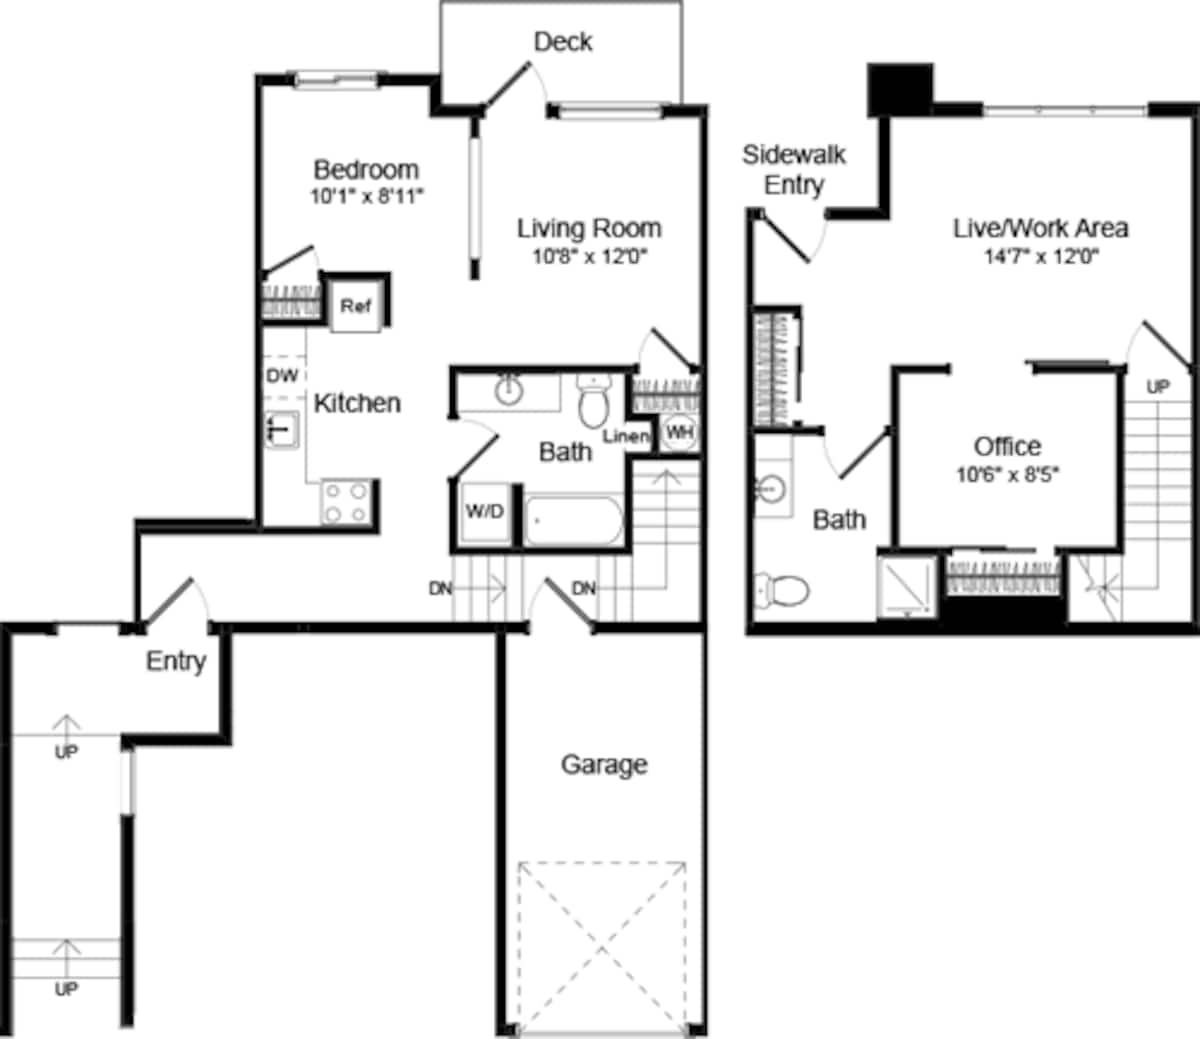 Floorplan diagram for Live Work 1-B - Phase III, showing 1 bedroom